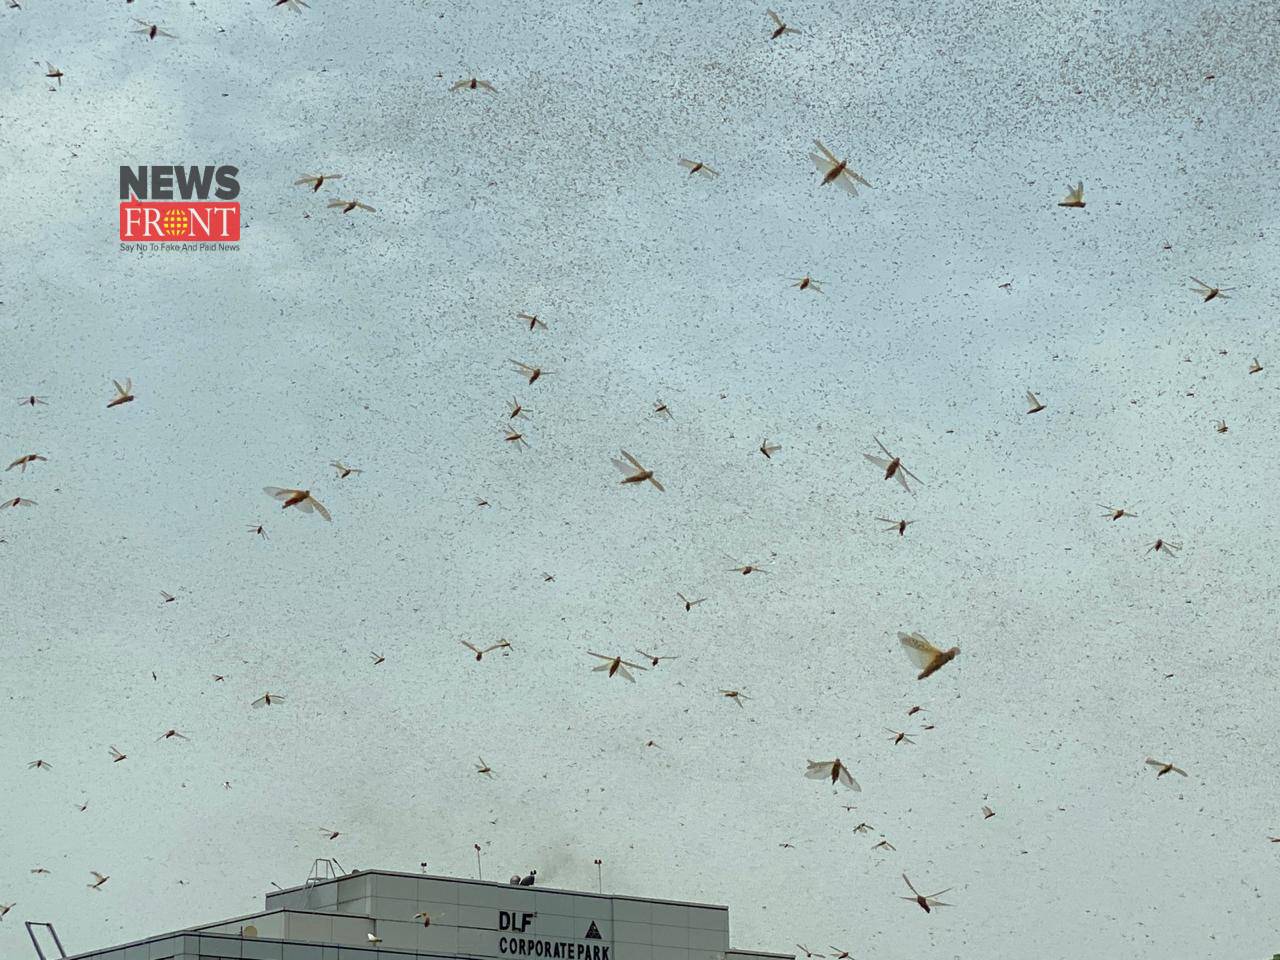 locust attack | newsfront.co